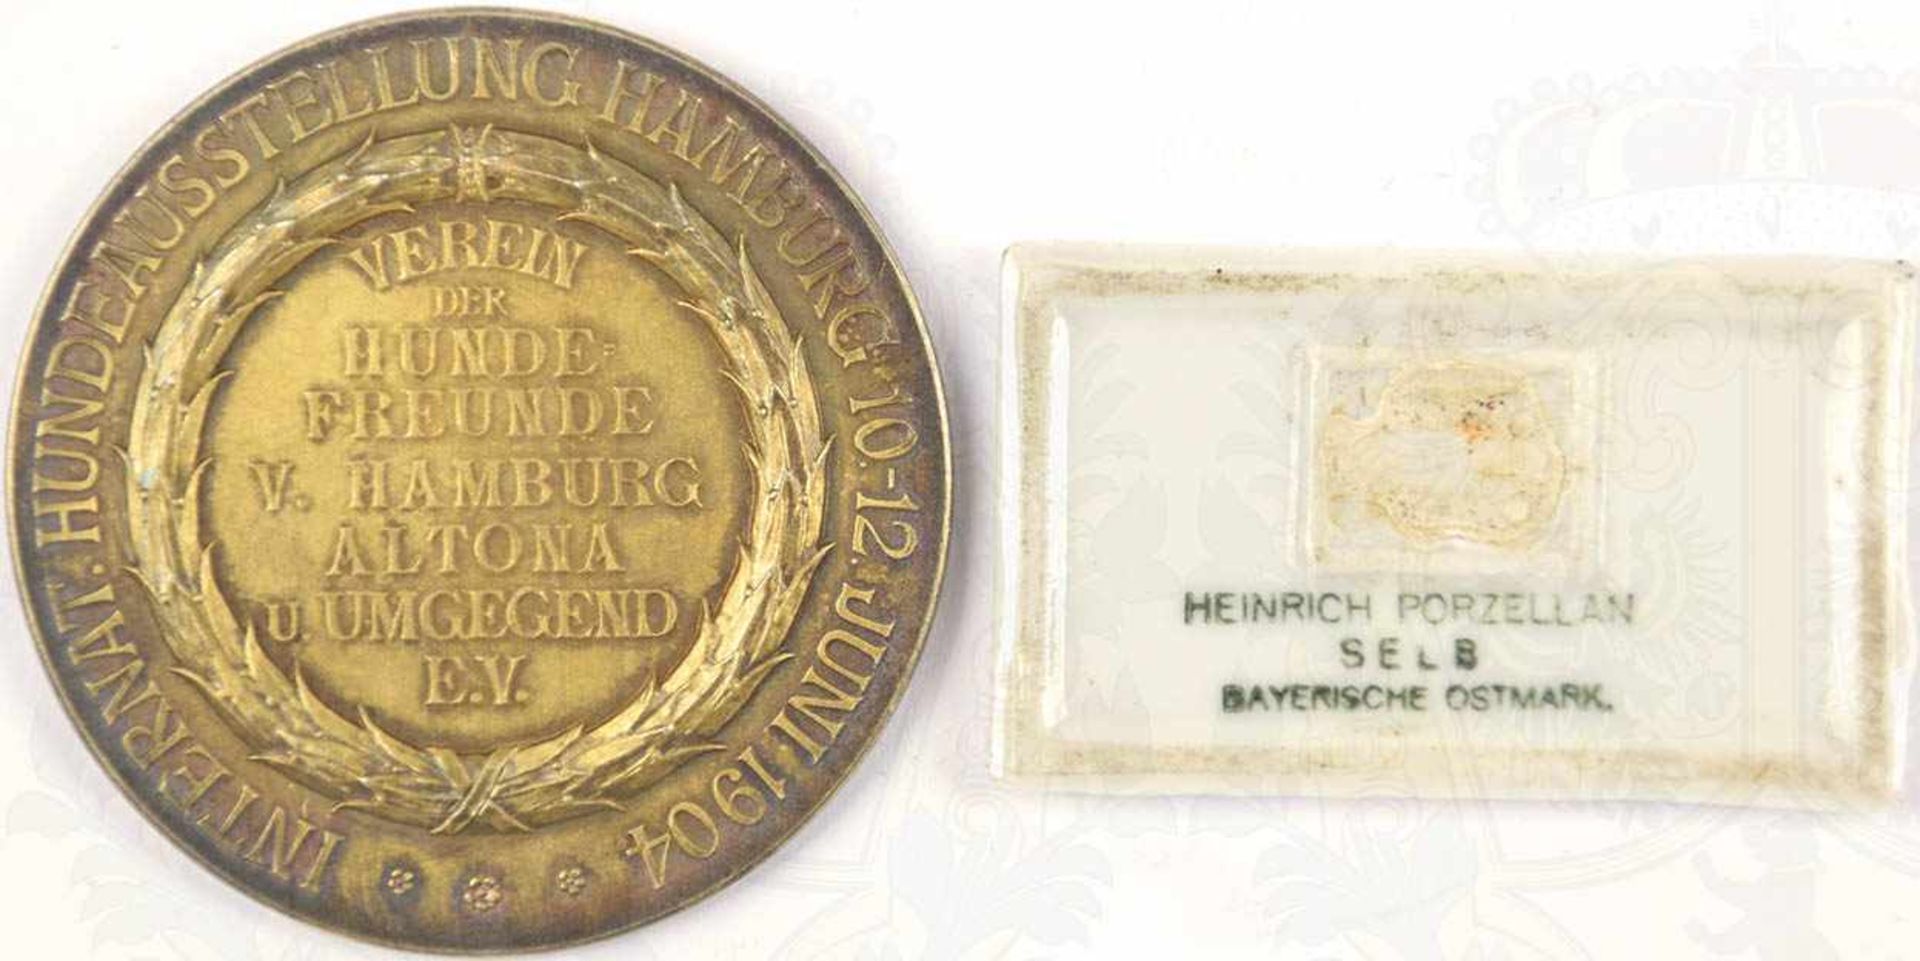 KONVOLUT HANSESTADT HAMBURG, Medaille Verein f. Hundefreunde Hbg.-Internat. Hundeausstellung 1904, - Bild 2 aus 2